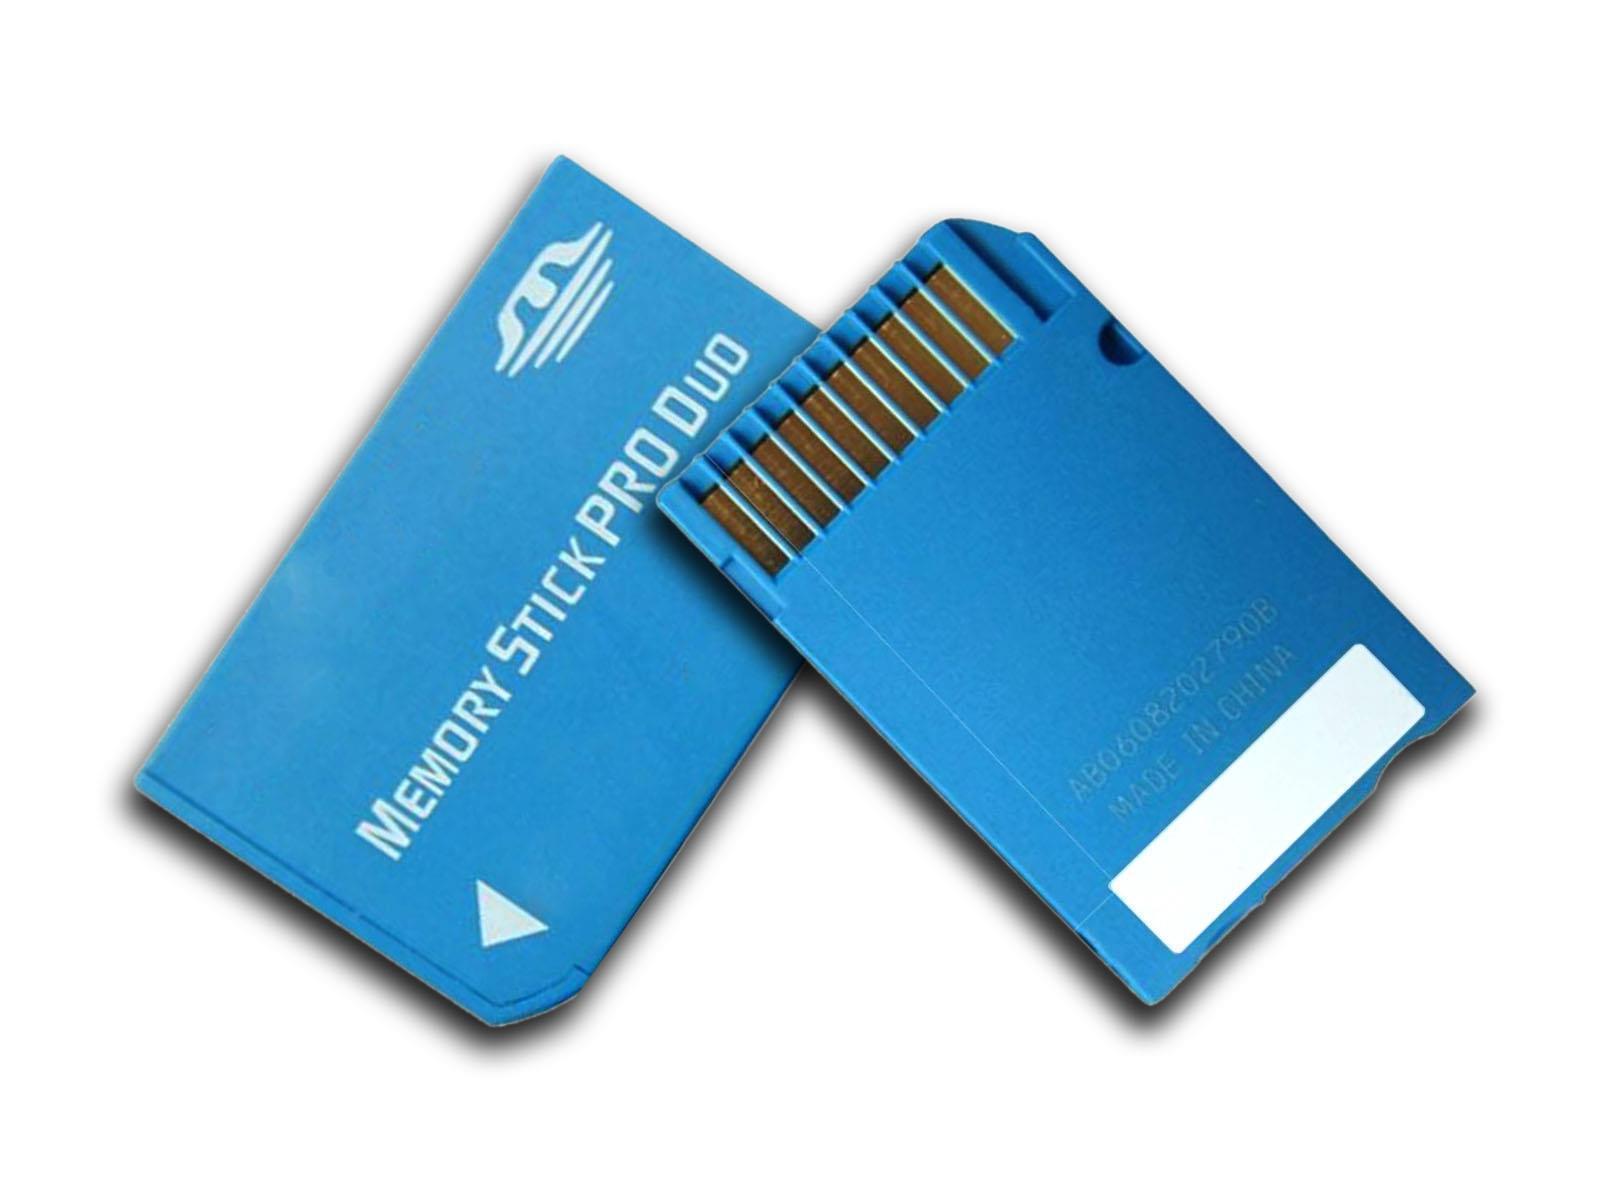 2GB MS Pro Card